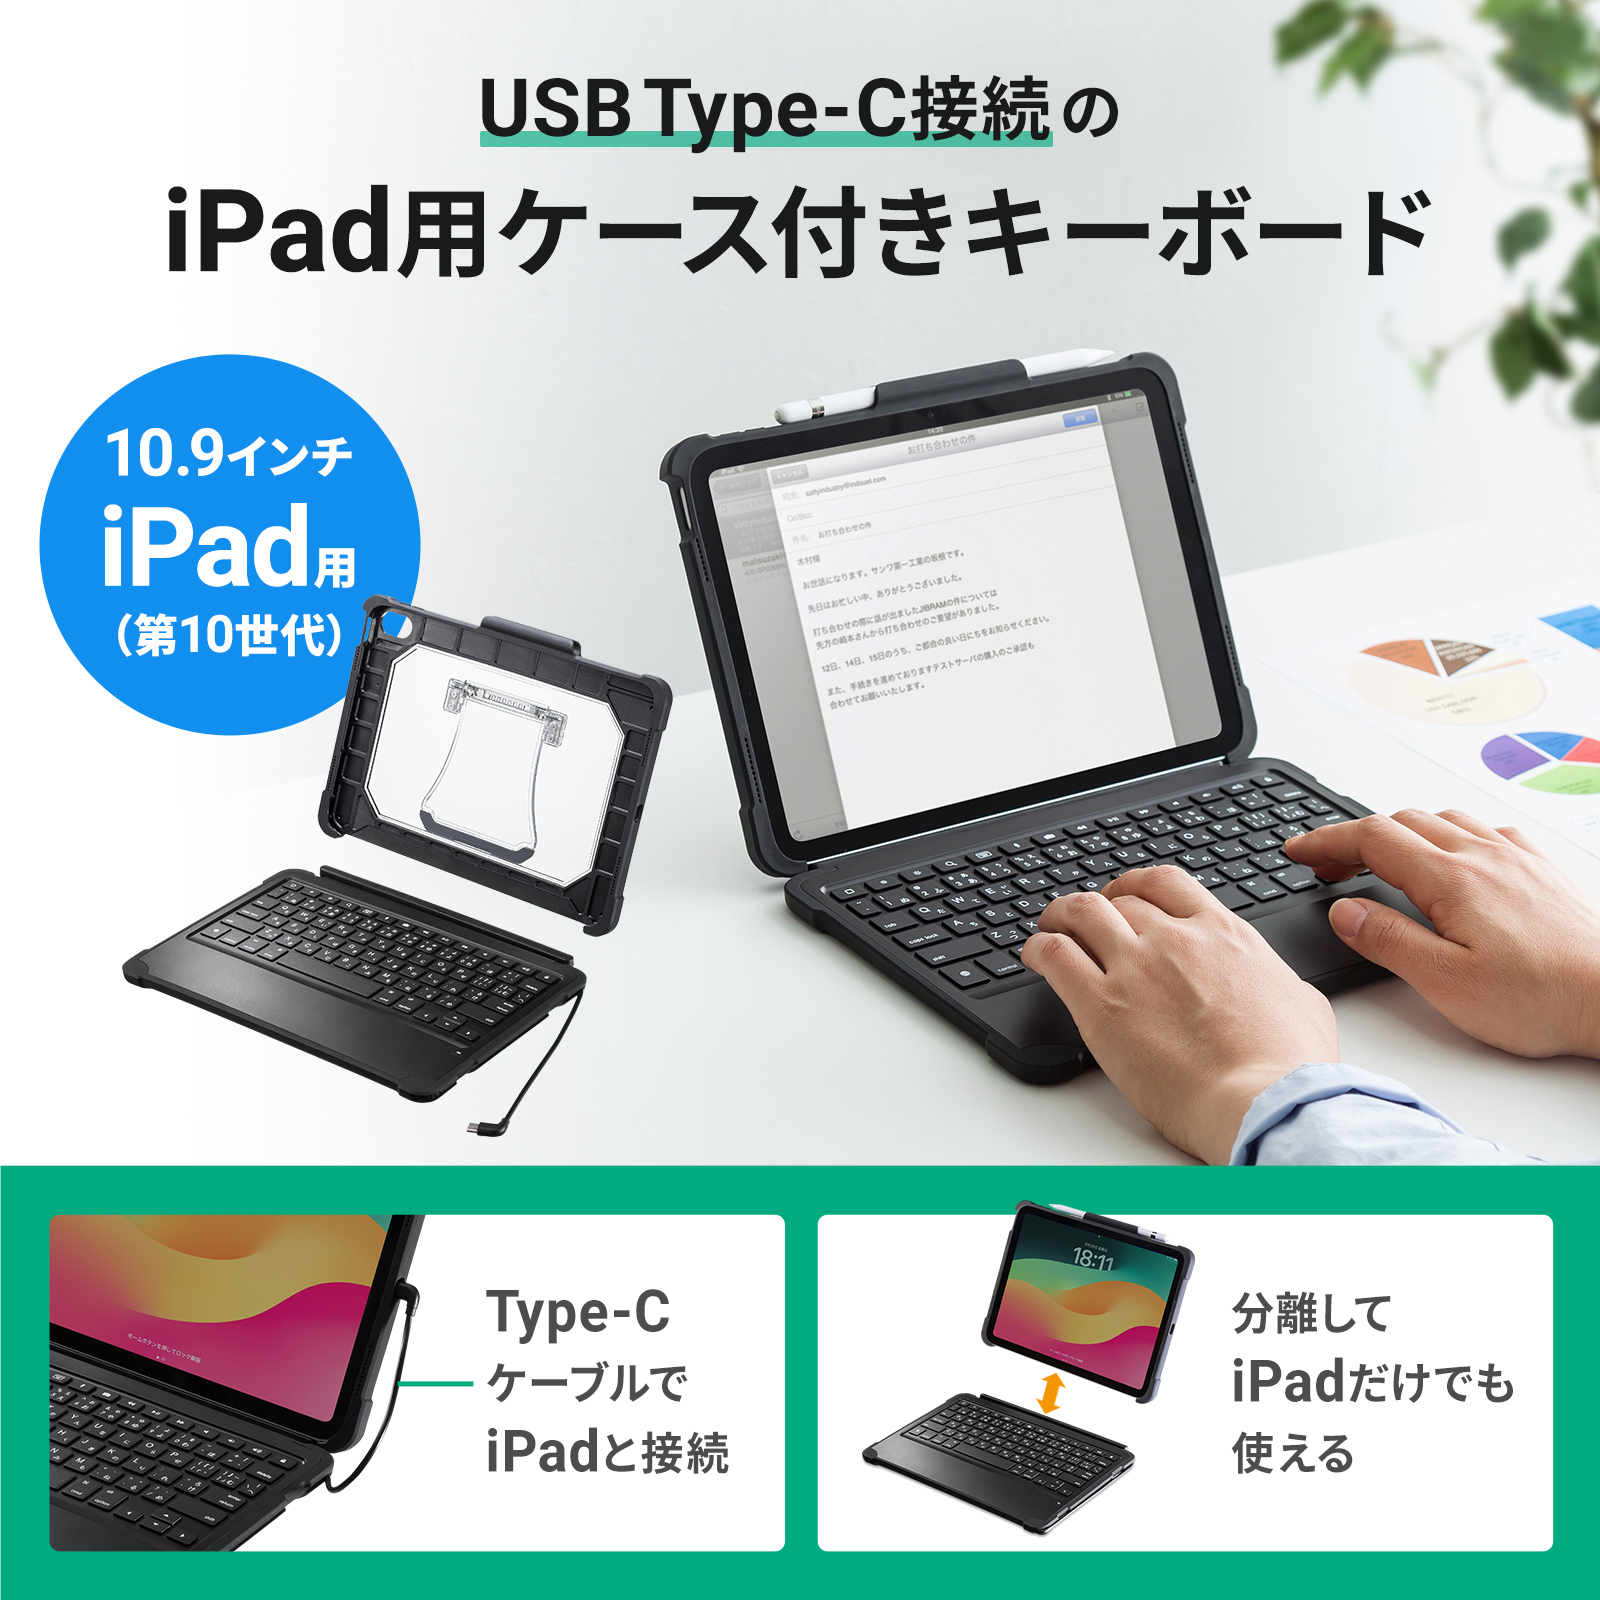 USB Type-C接続のiPad用ケース付きキーボード